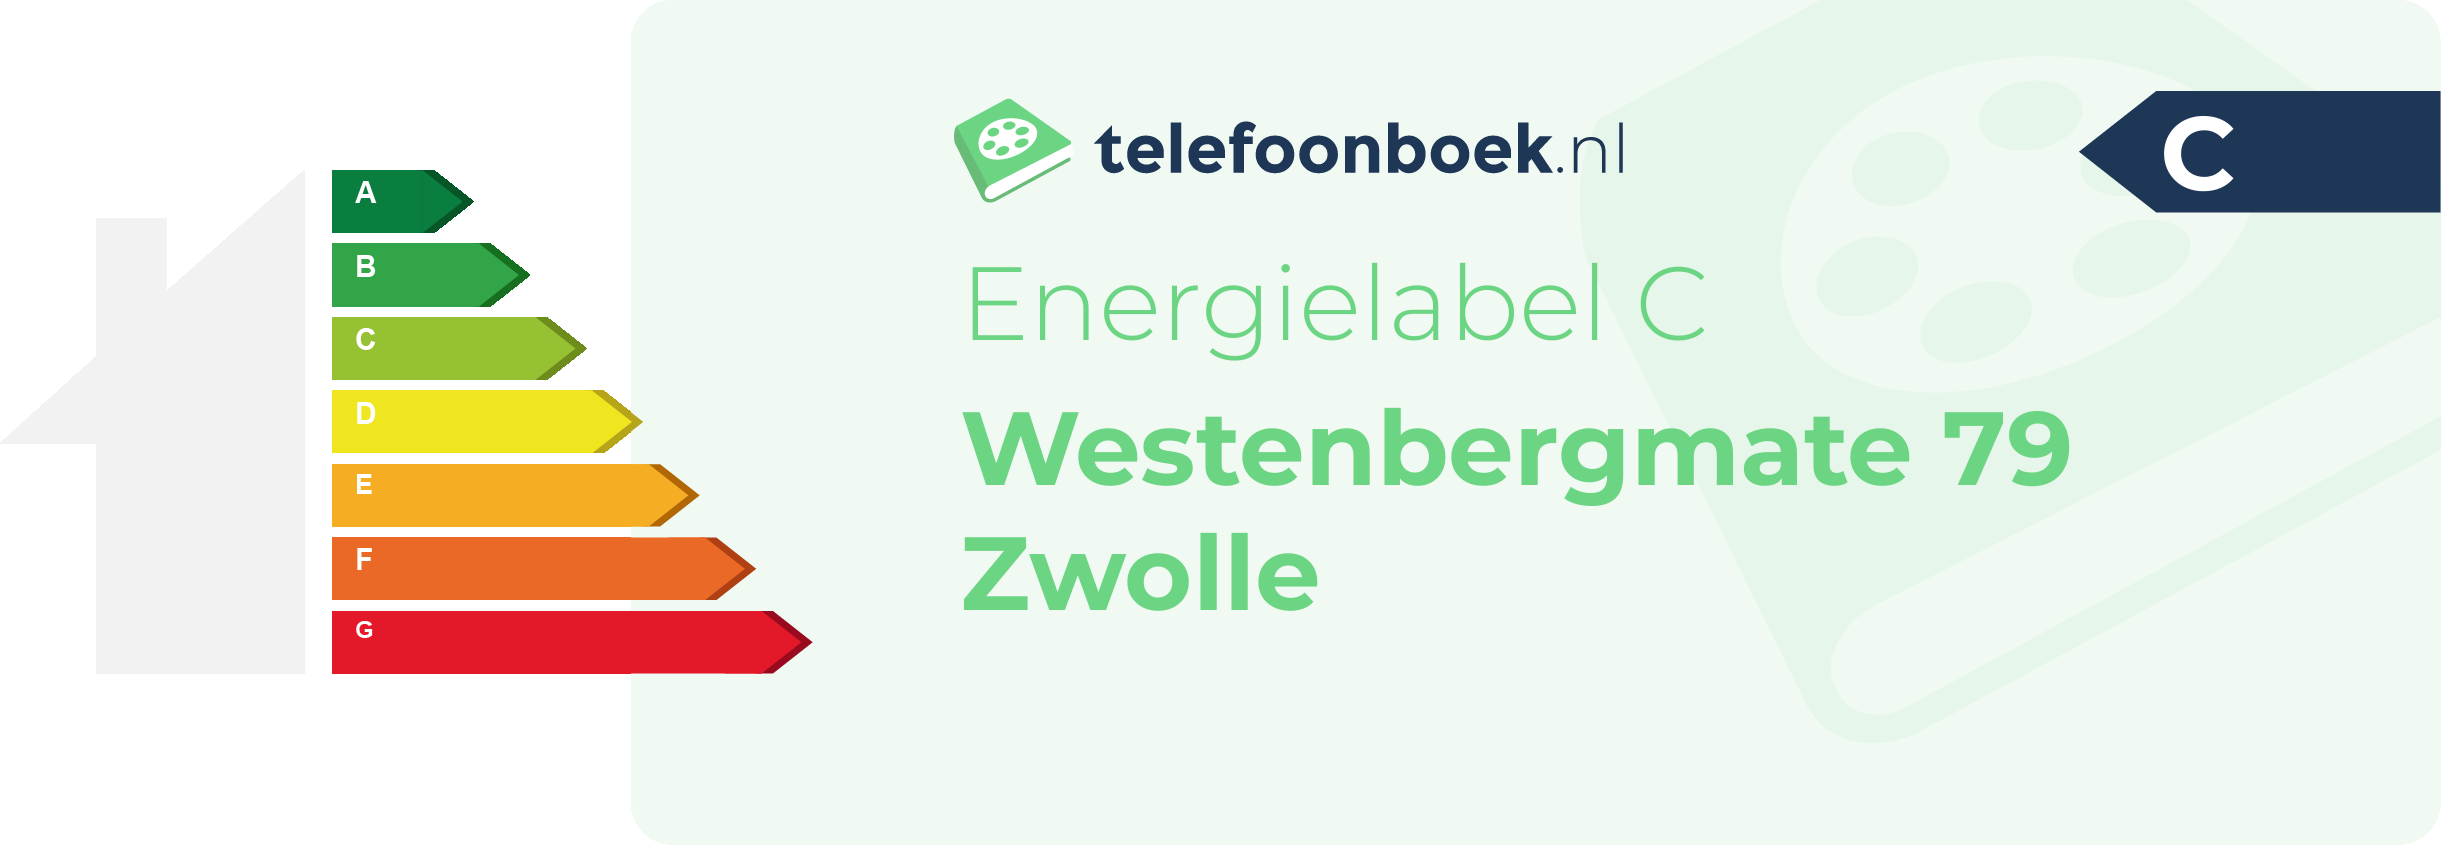 Energielabel Westenbergmate 79 Zwolle